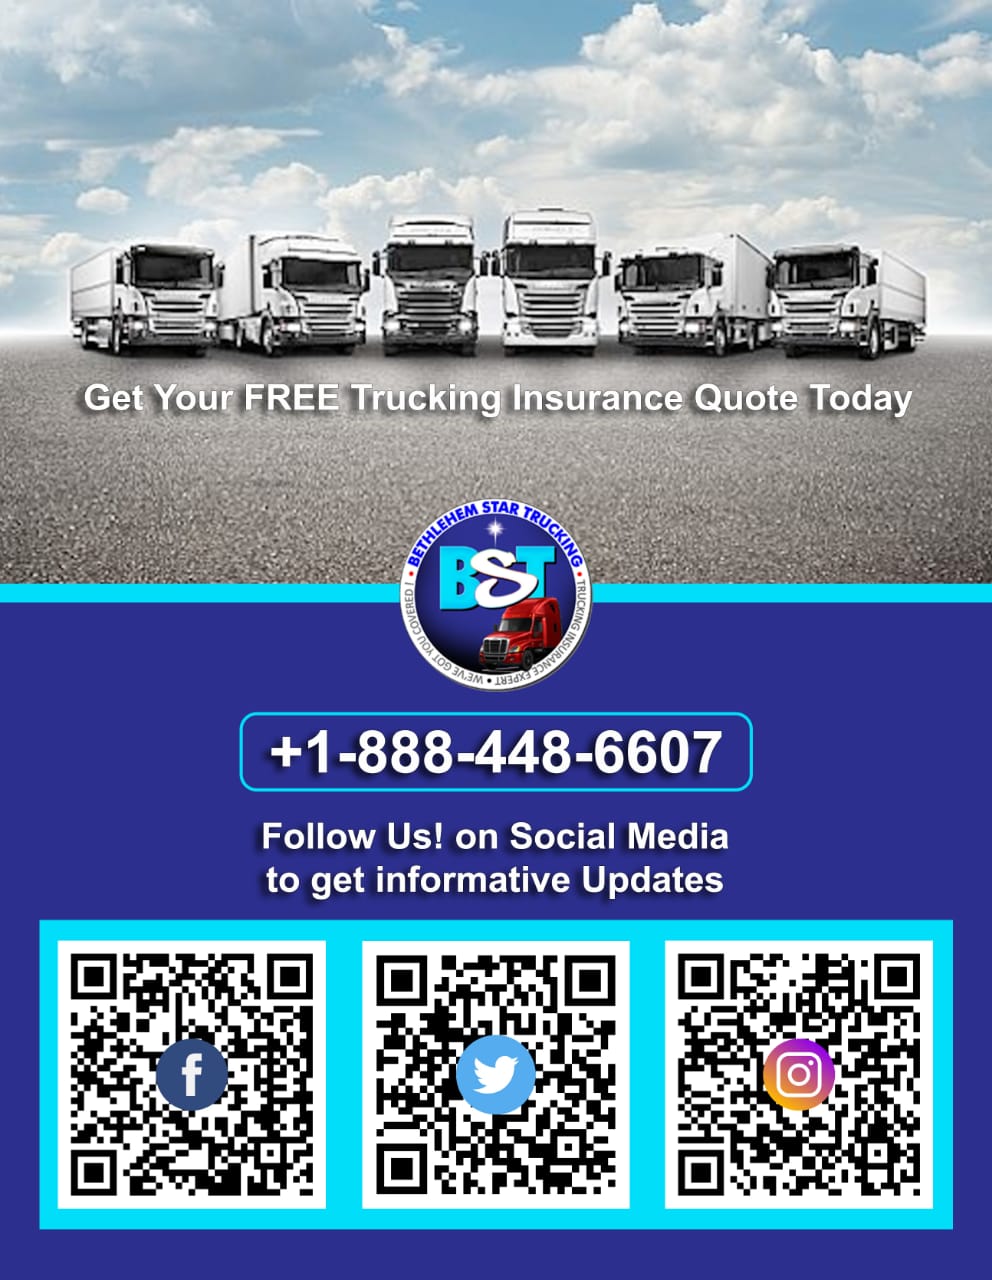 Bethlehem Truck LLC | 2116 Coke Works Rd, Bethlehem, PA 18015 | Phone: (484) 550-7070